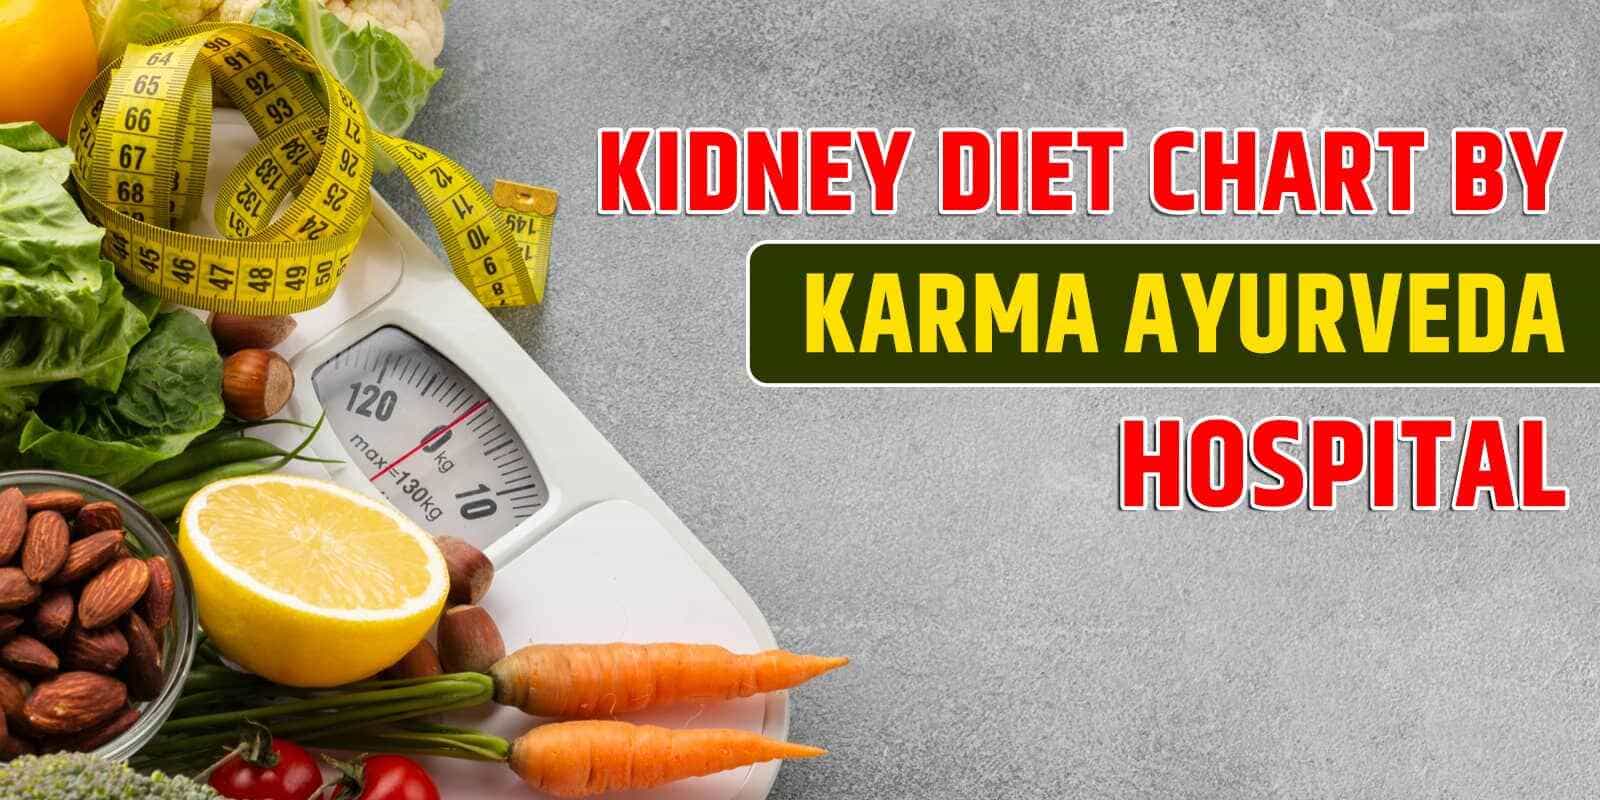 Kidney diet chart by Karma Ayurveda Hospital